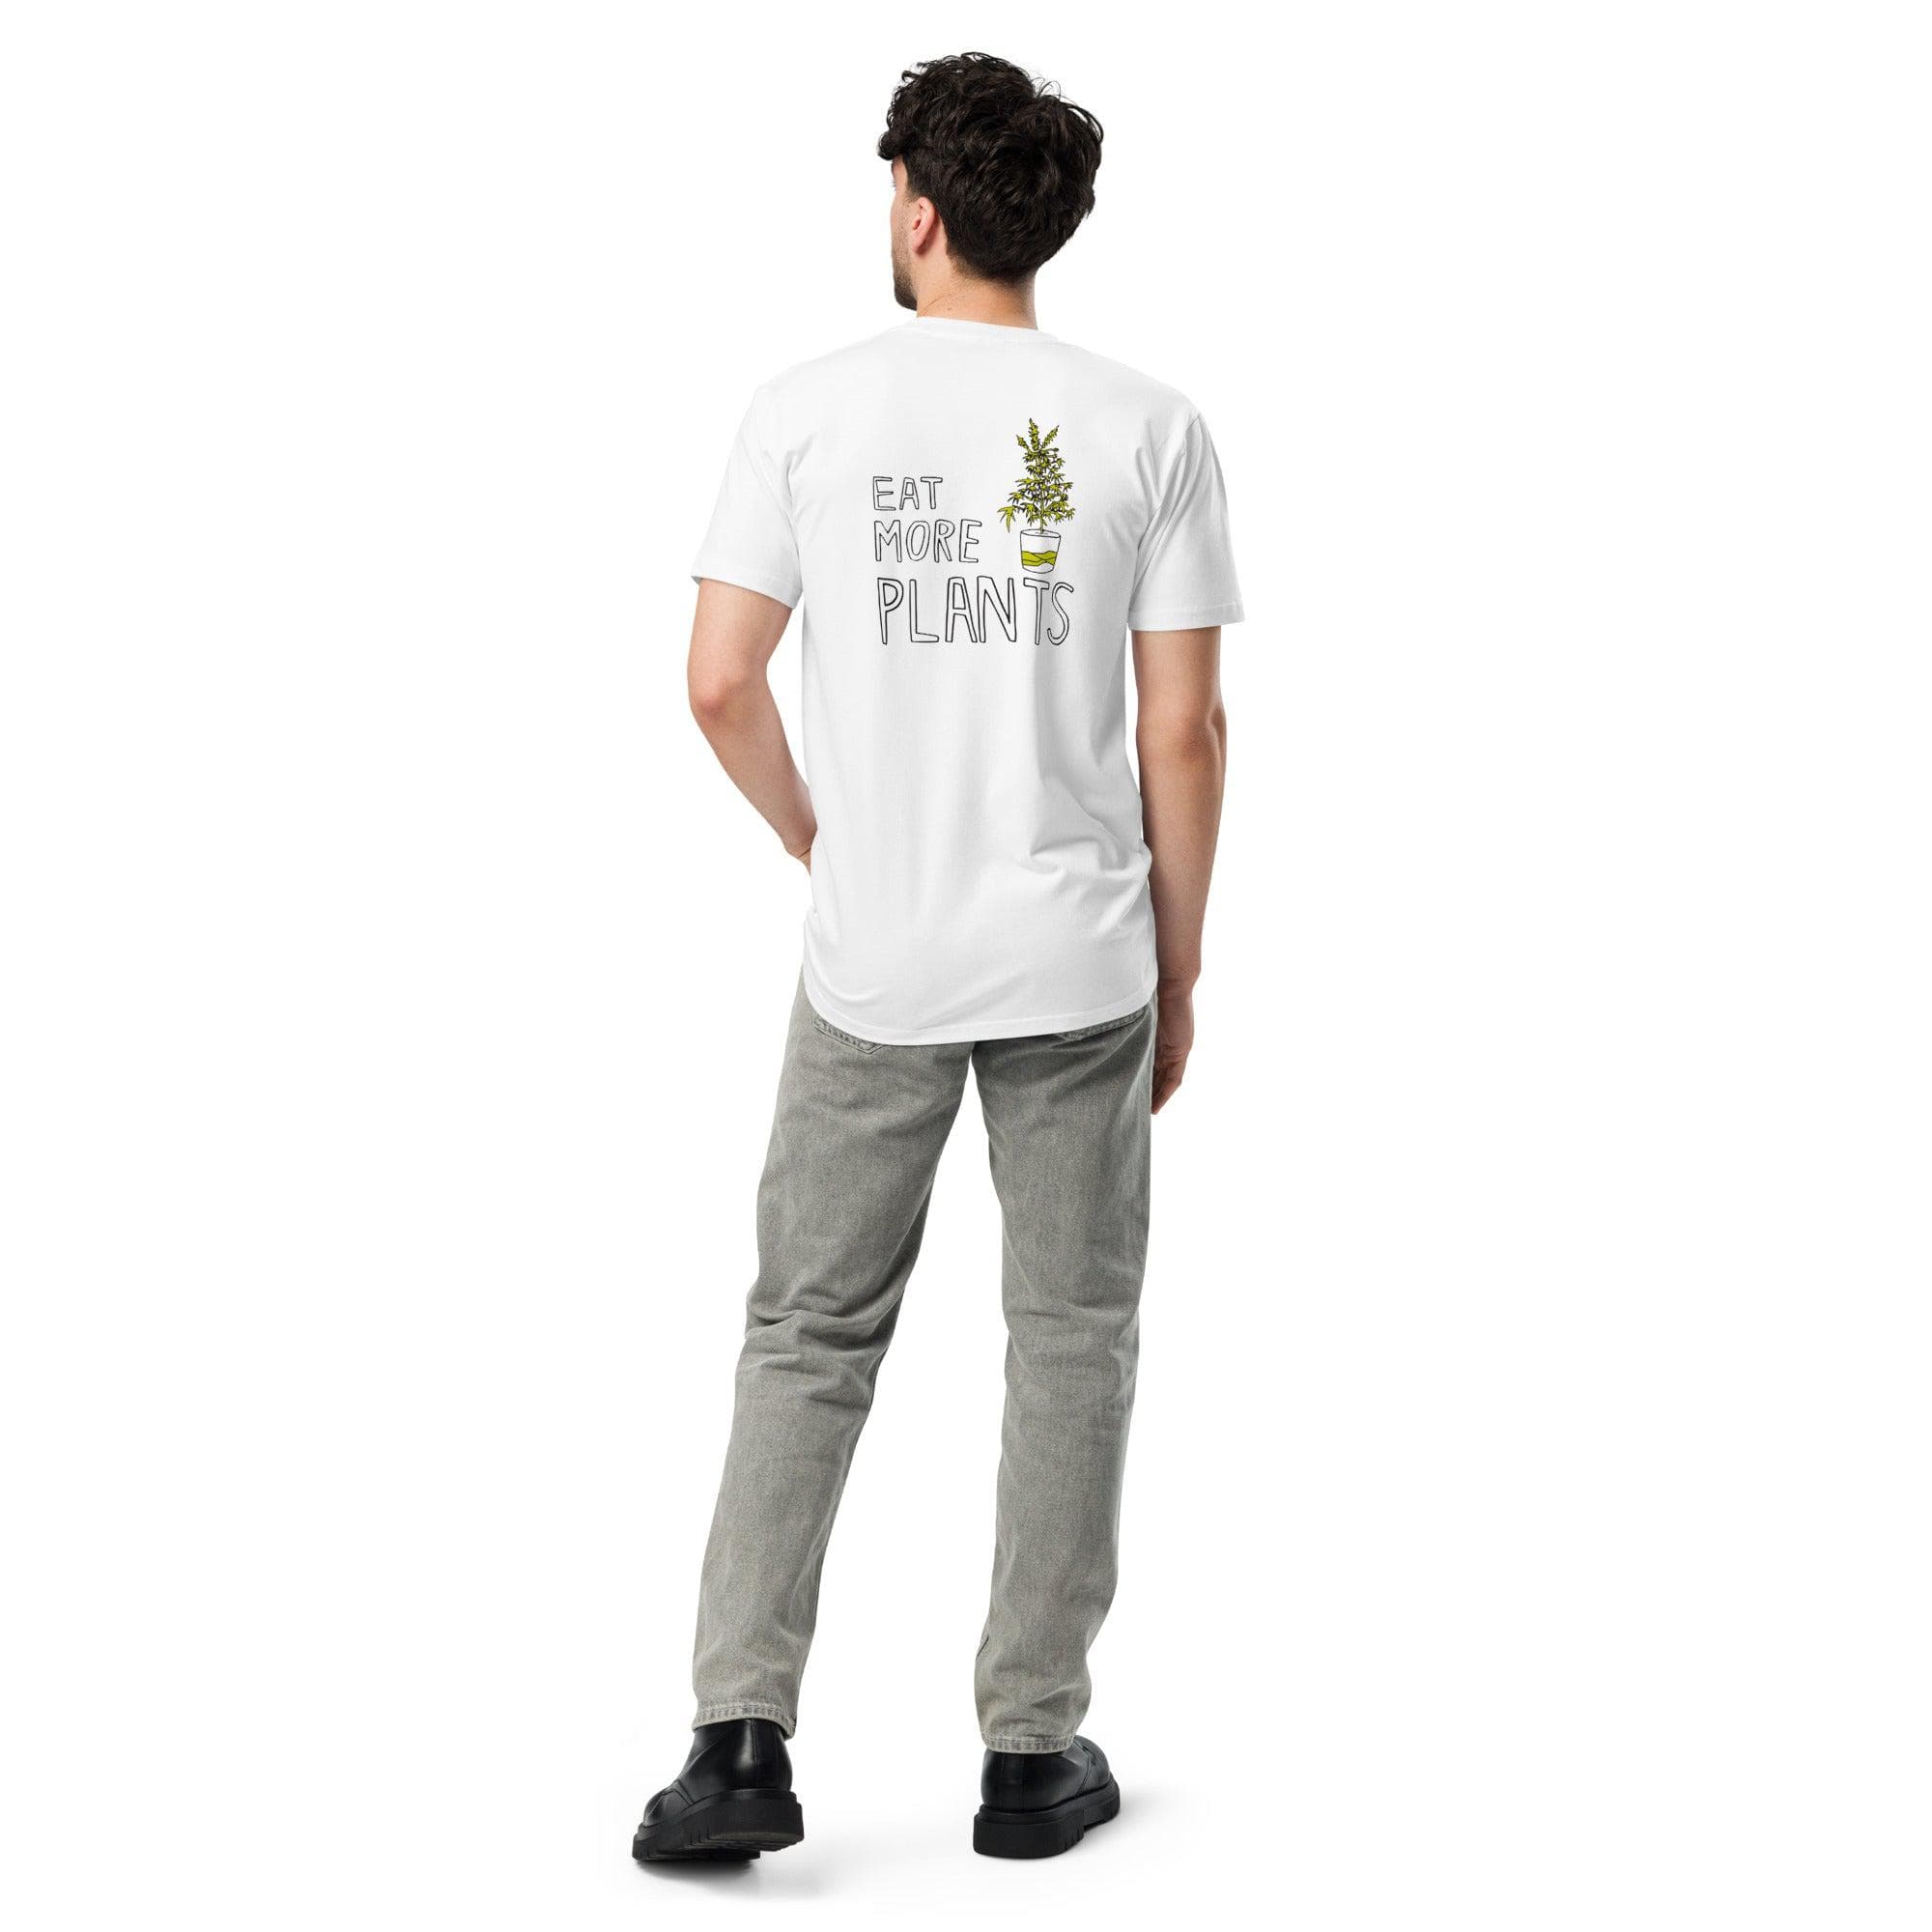 "Eat More Plants" T-Shirt